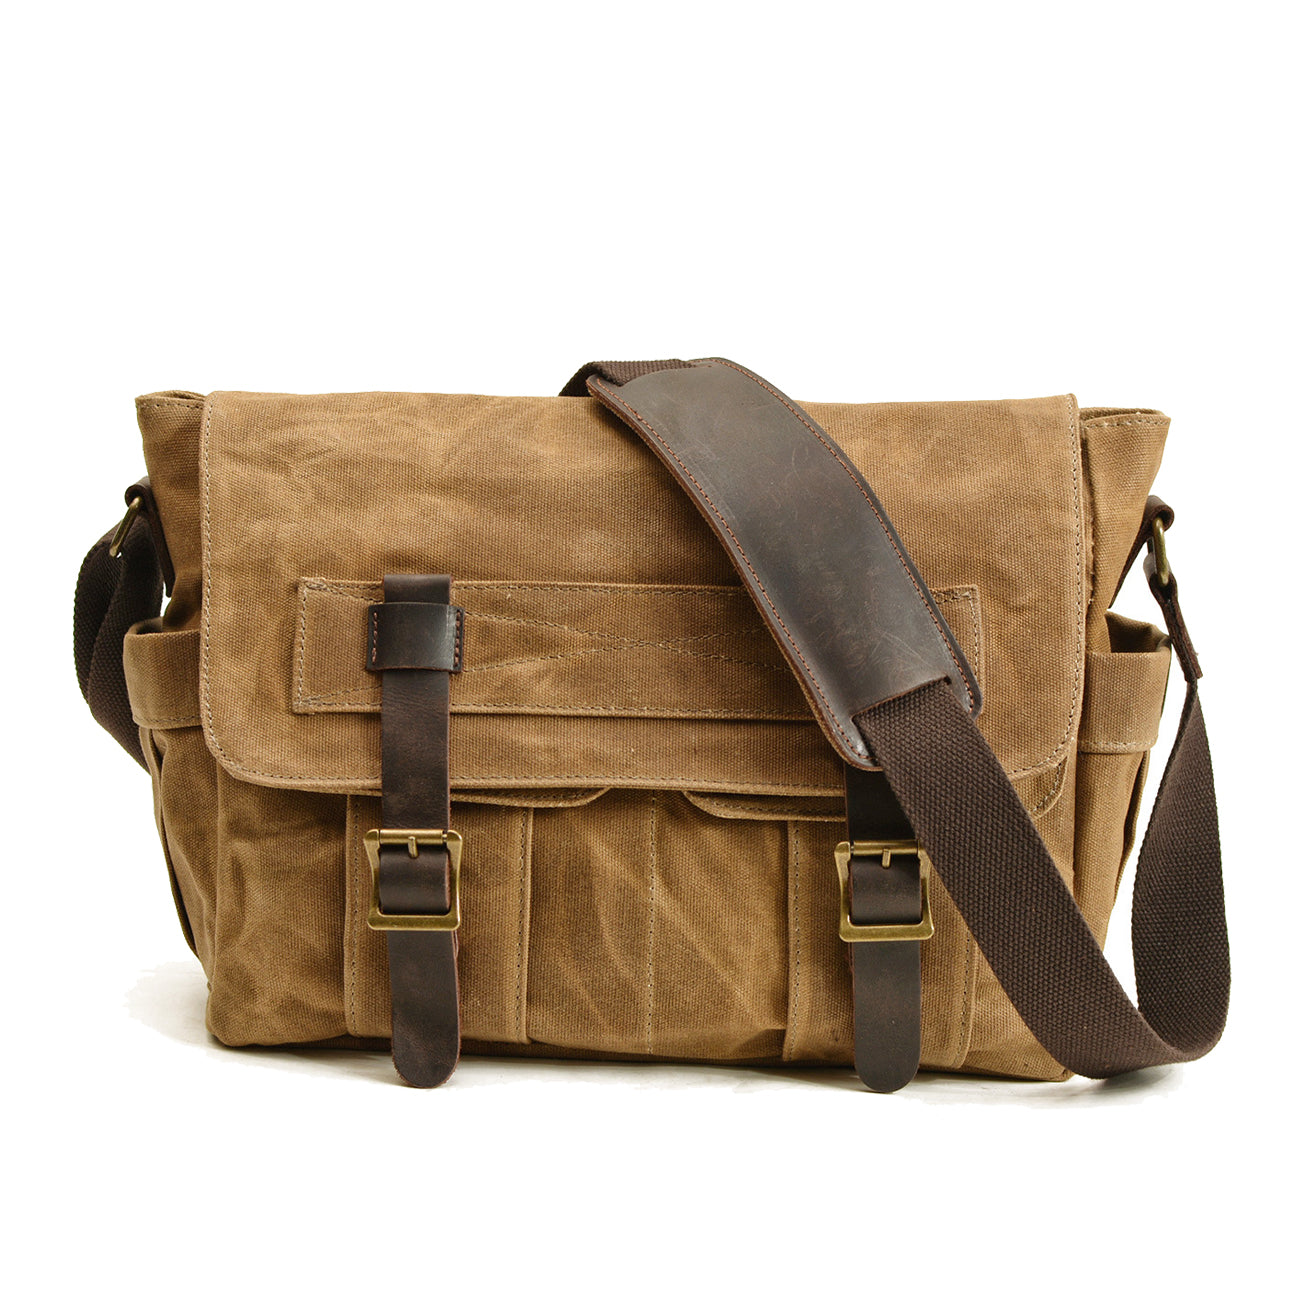 PICARD cross body bag Berlin Shoulder Bag Rot, Buy bags, purses &  accessories online